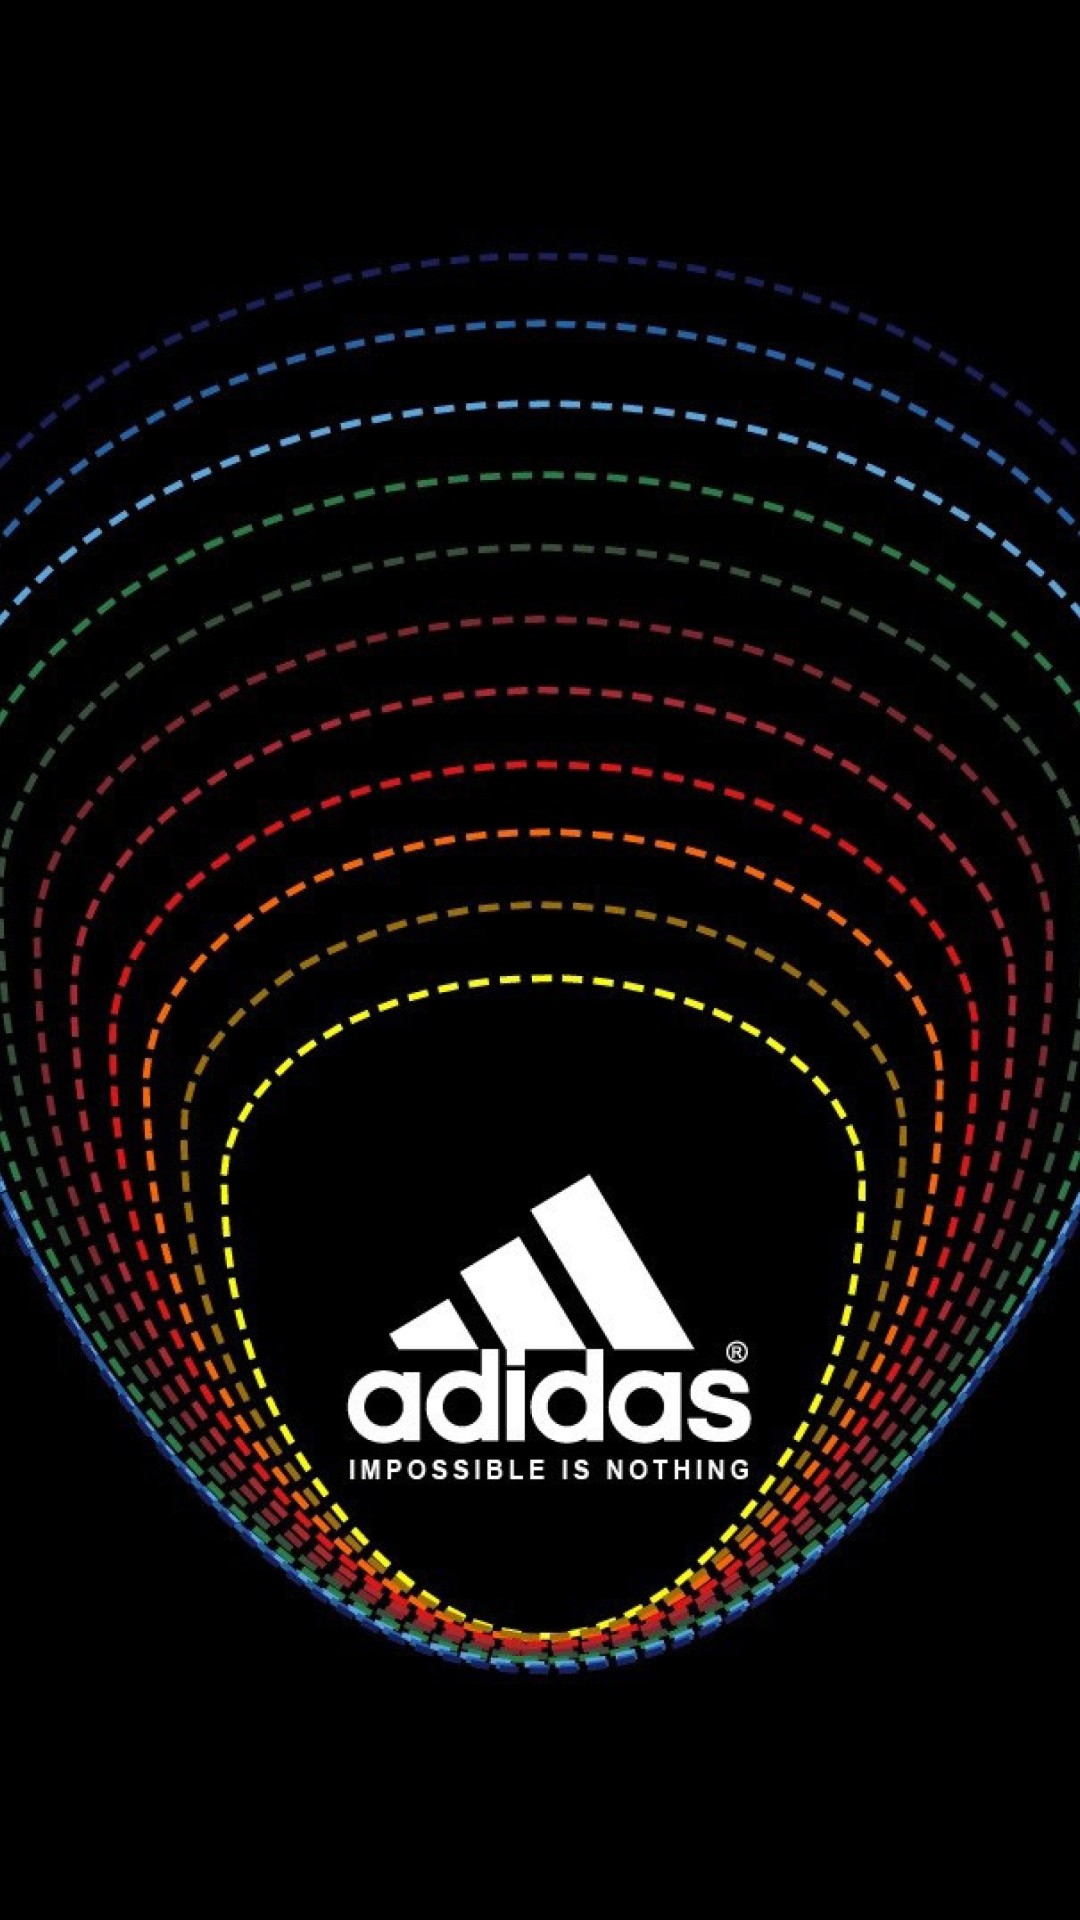 Black Adidas iPhone 6 wallpaper